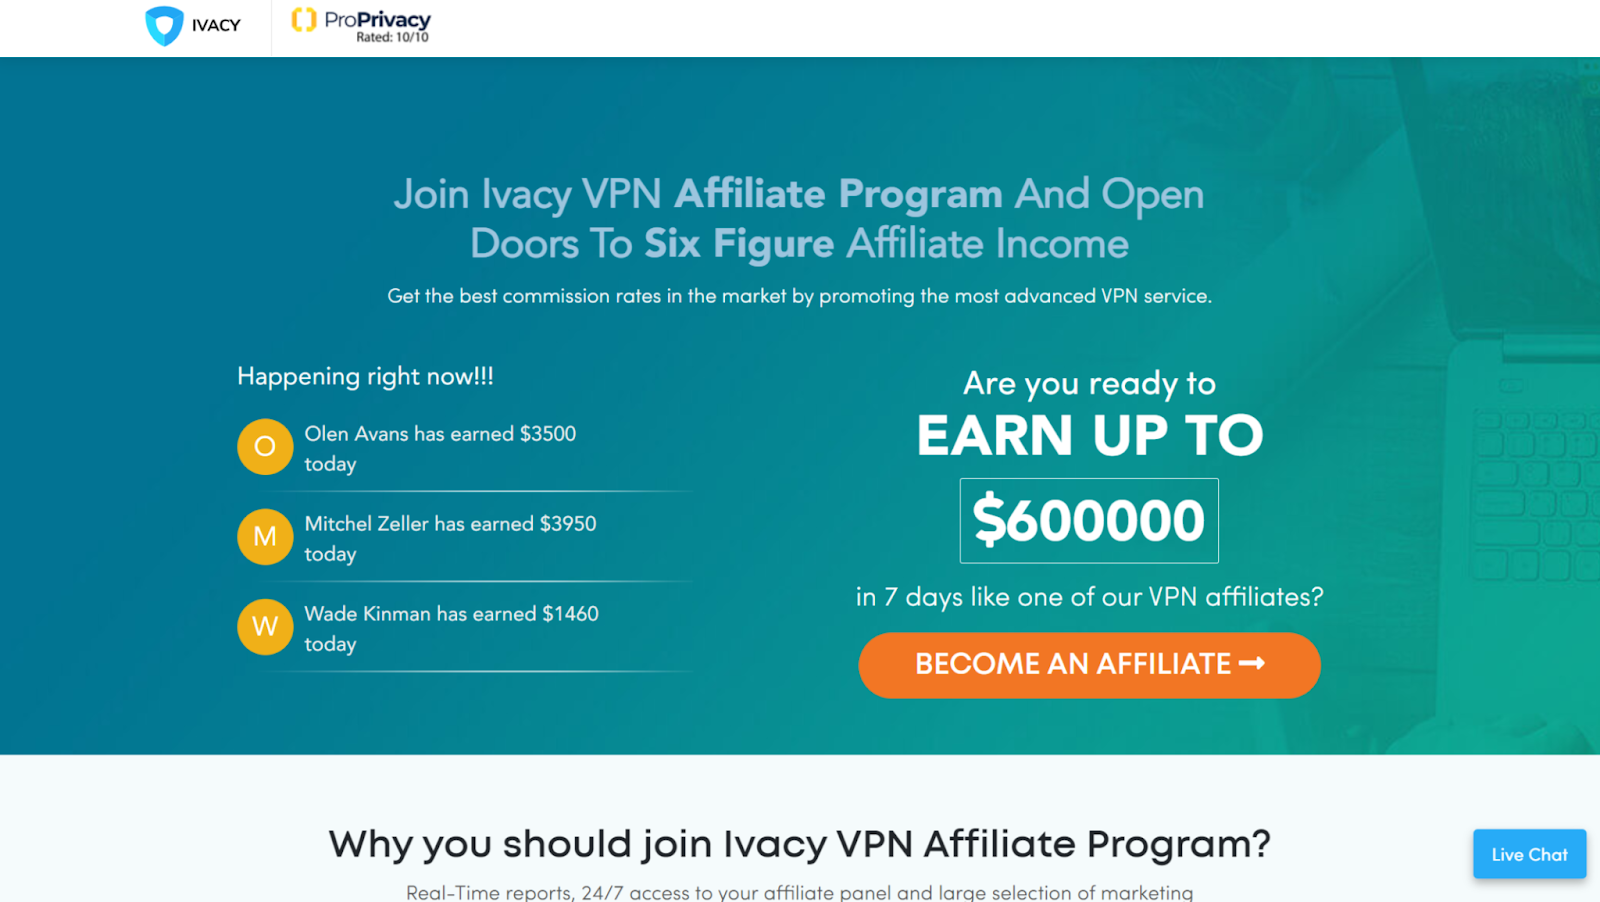 vacy VPN Affiliate Program home page